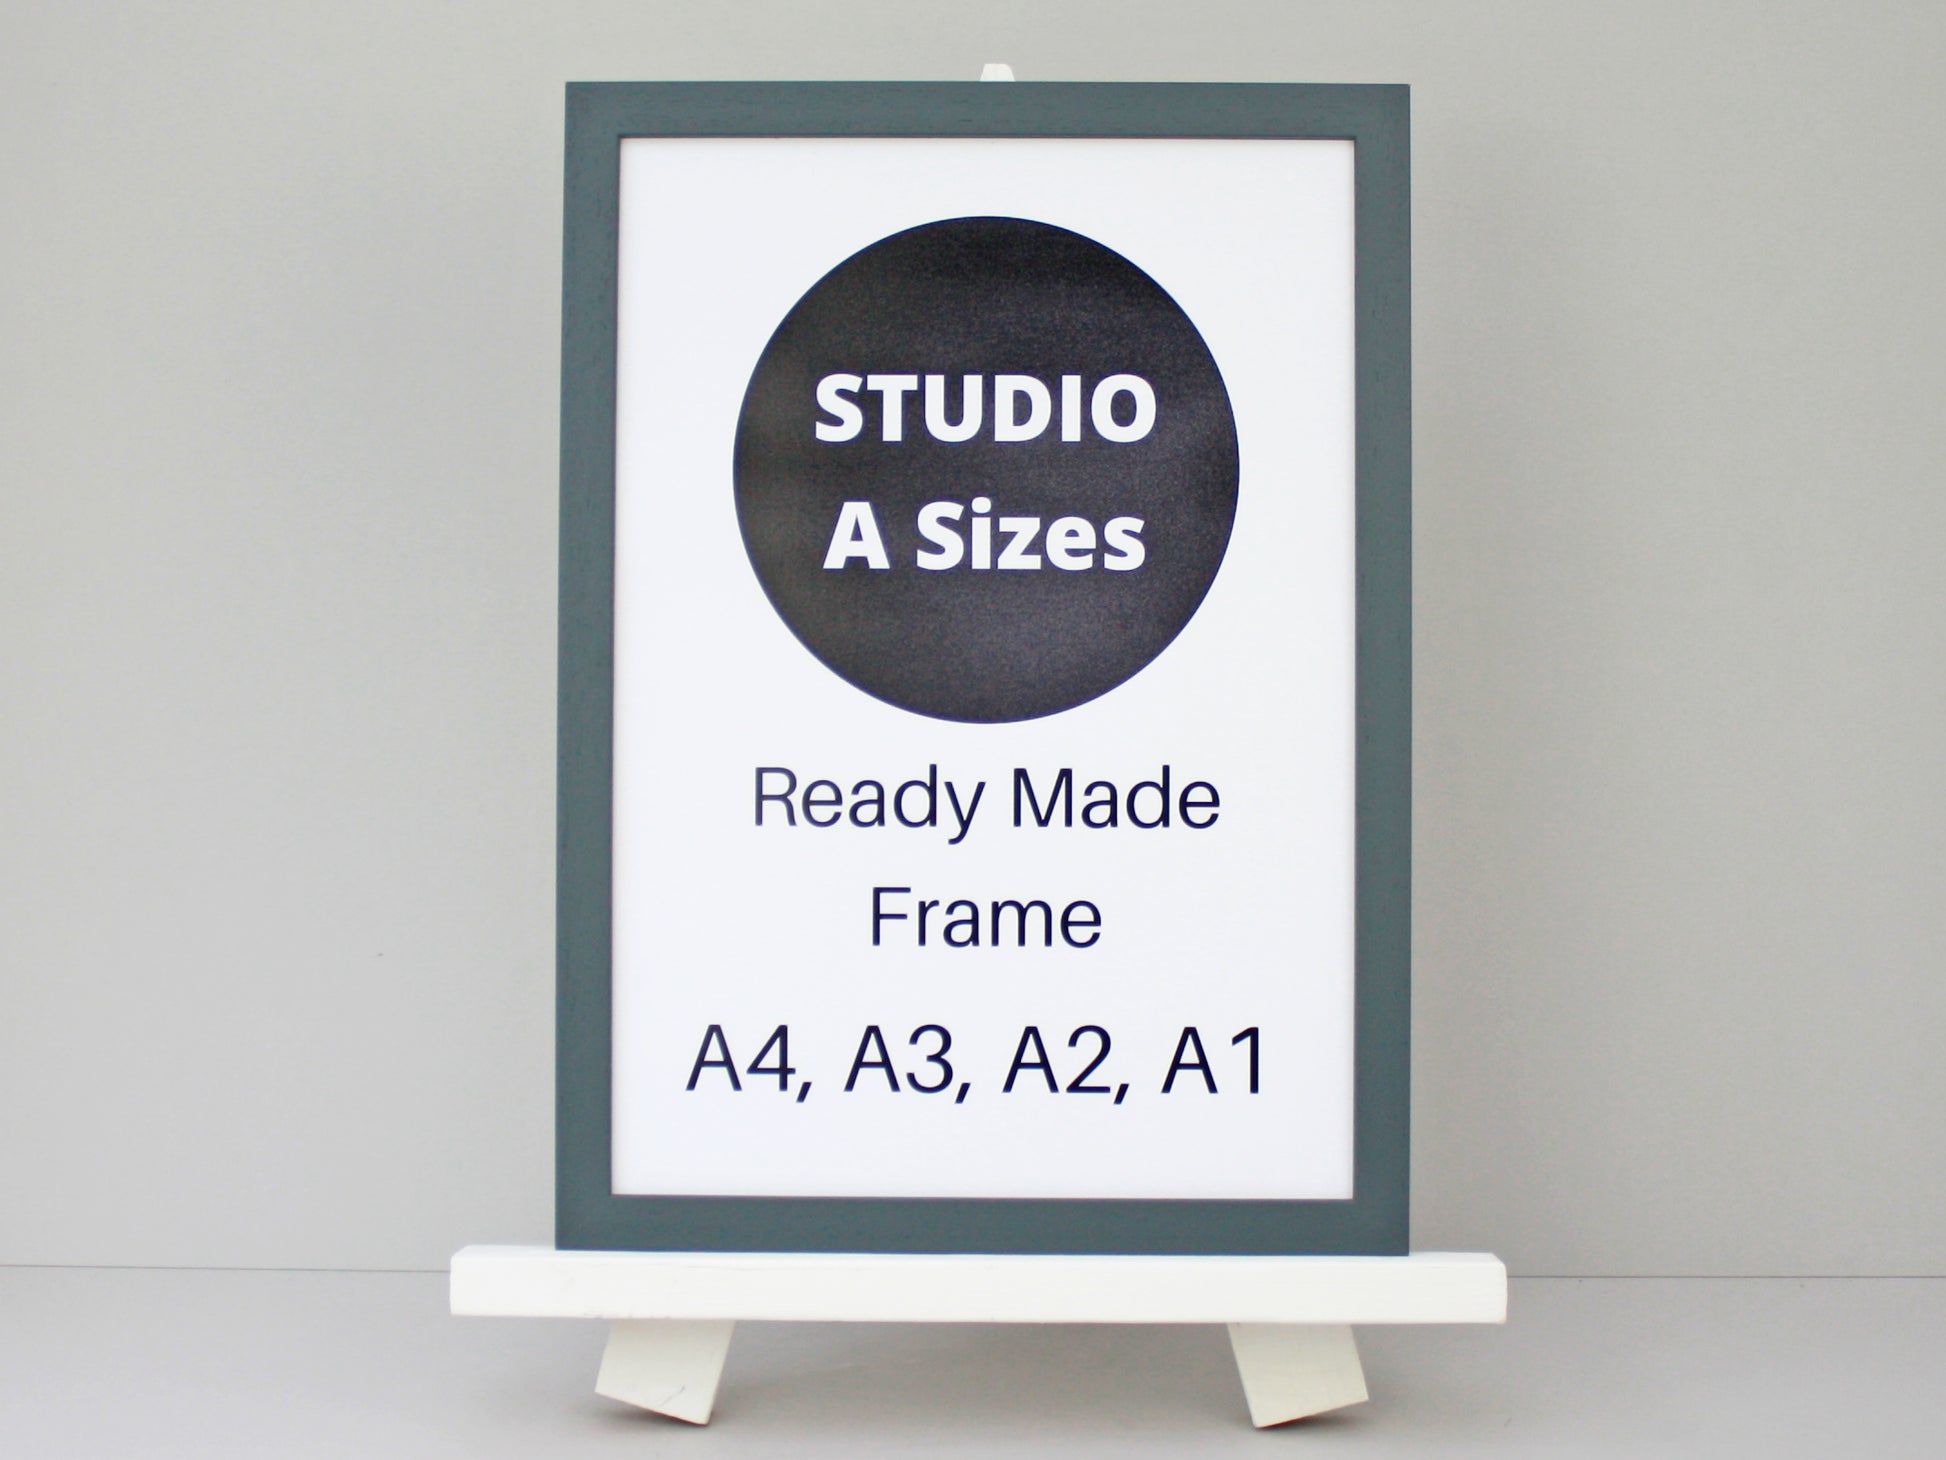 Gallery Wall Set - 5 Pcs Wooden Photo Frames. Studio Range. Various Colours. - PhotoFramesandMore - Wooden Picture Frames